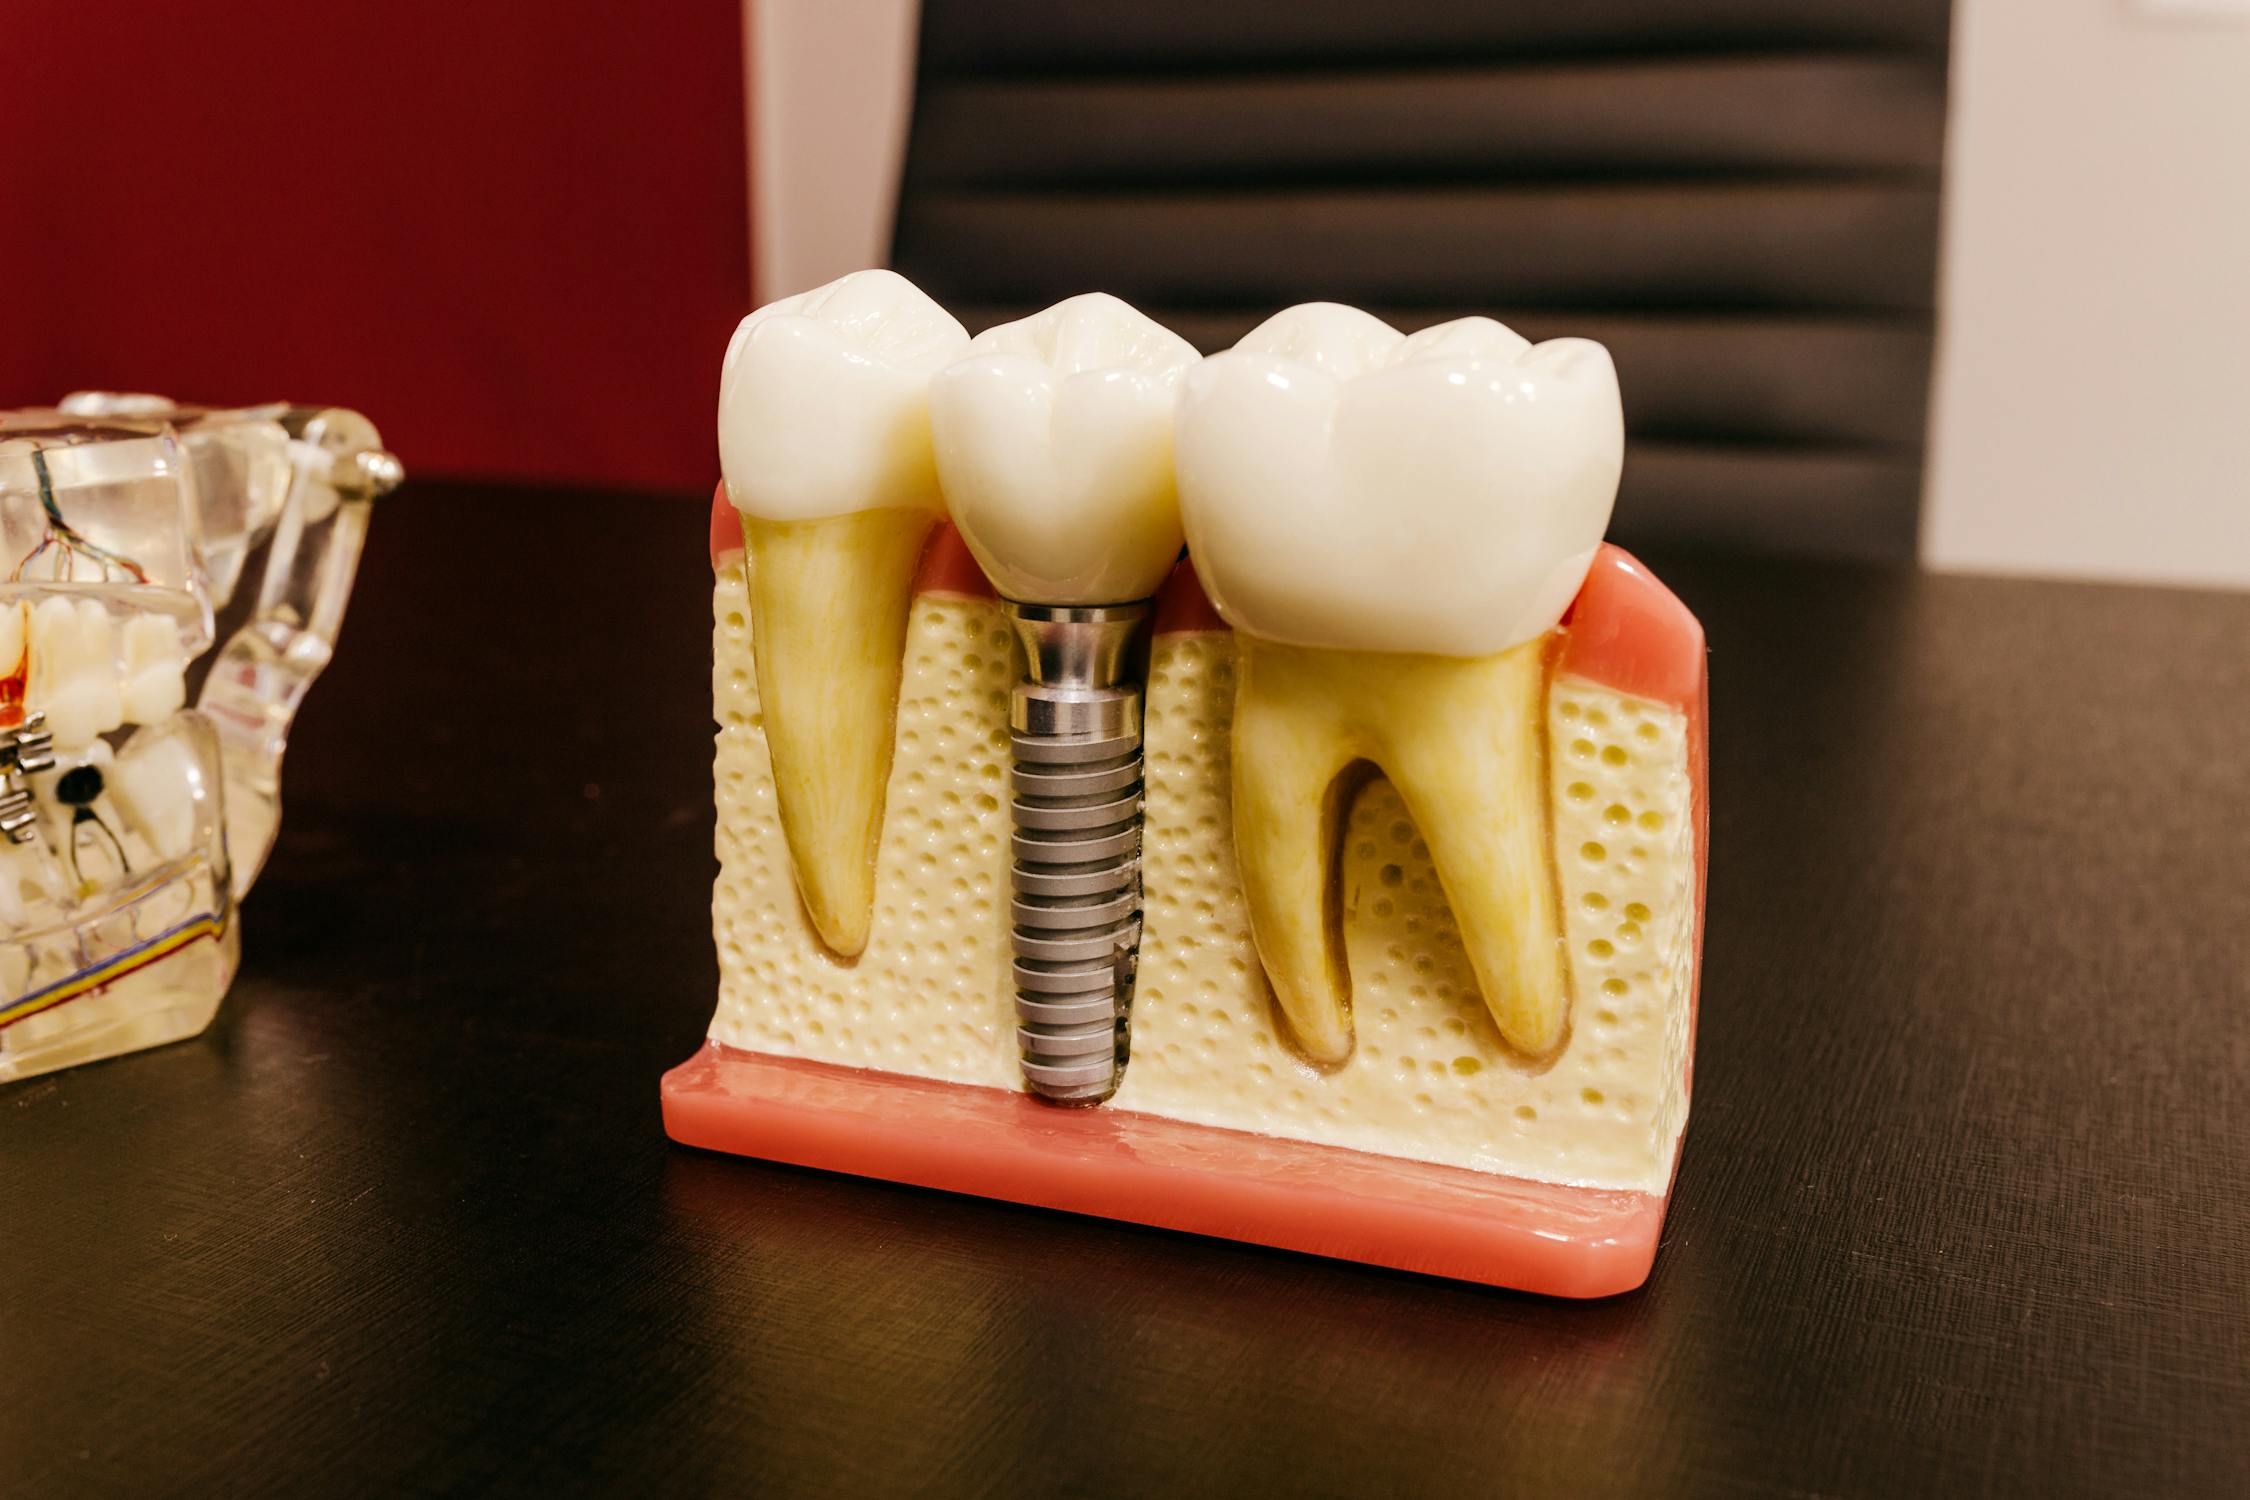 Dental Implants Photo by Jonathan Borba from Pexels